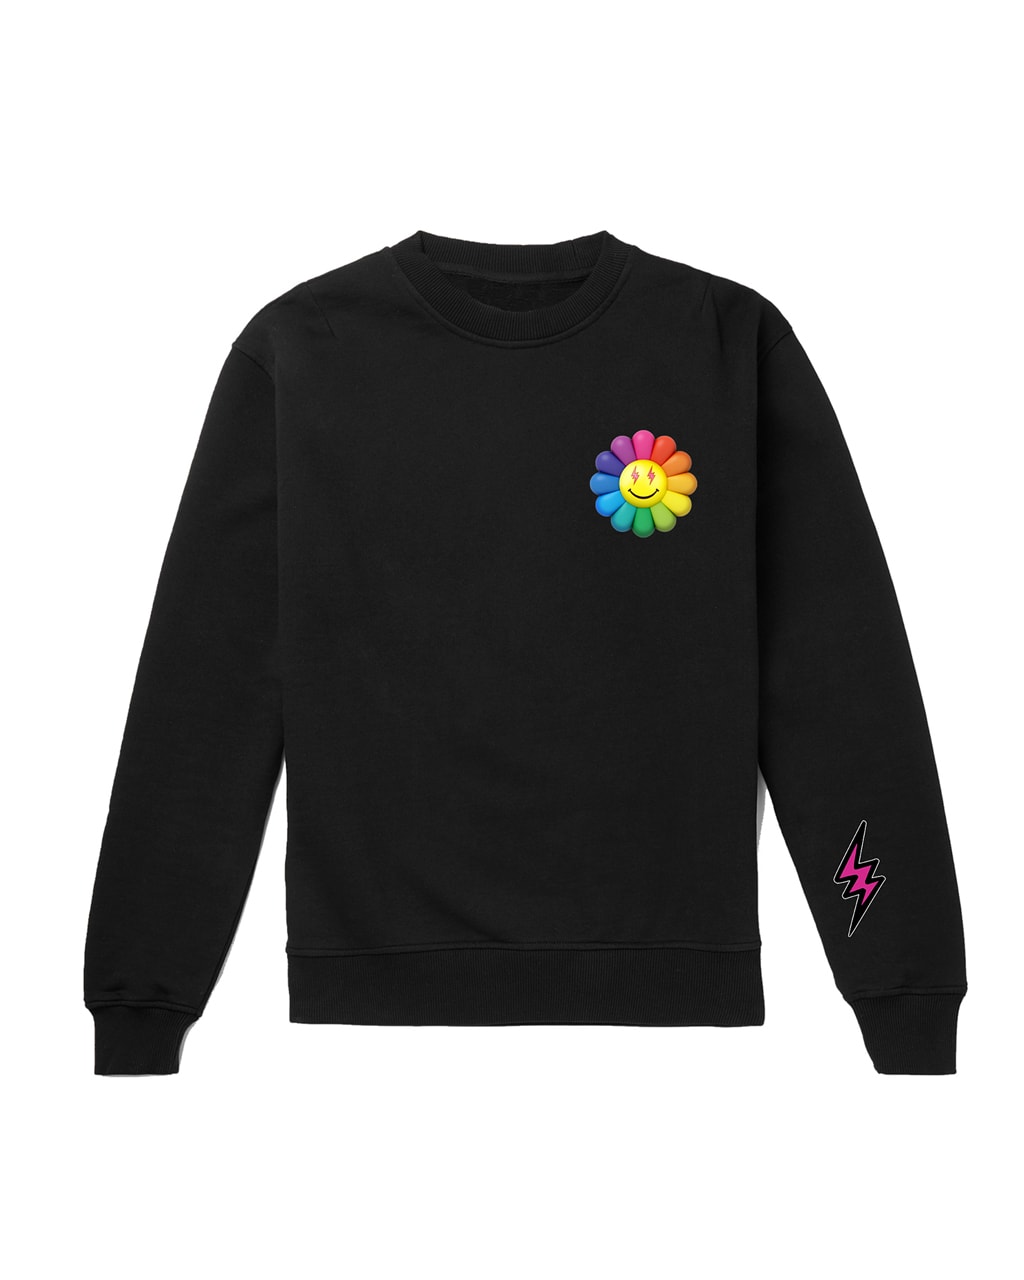 J Balvin x Takashi Murakami 'Colores' Merch Final Drop collection sweatshirt black